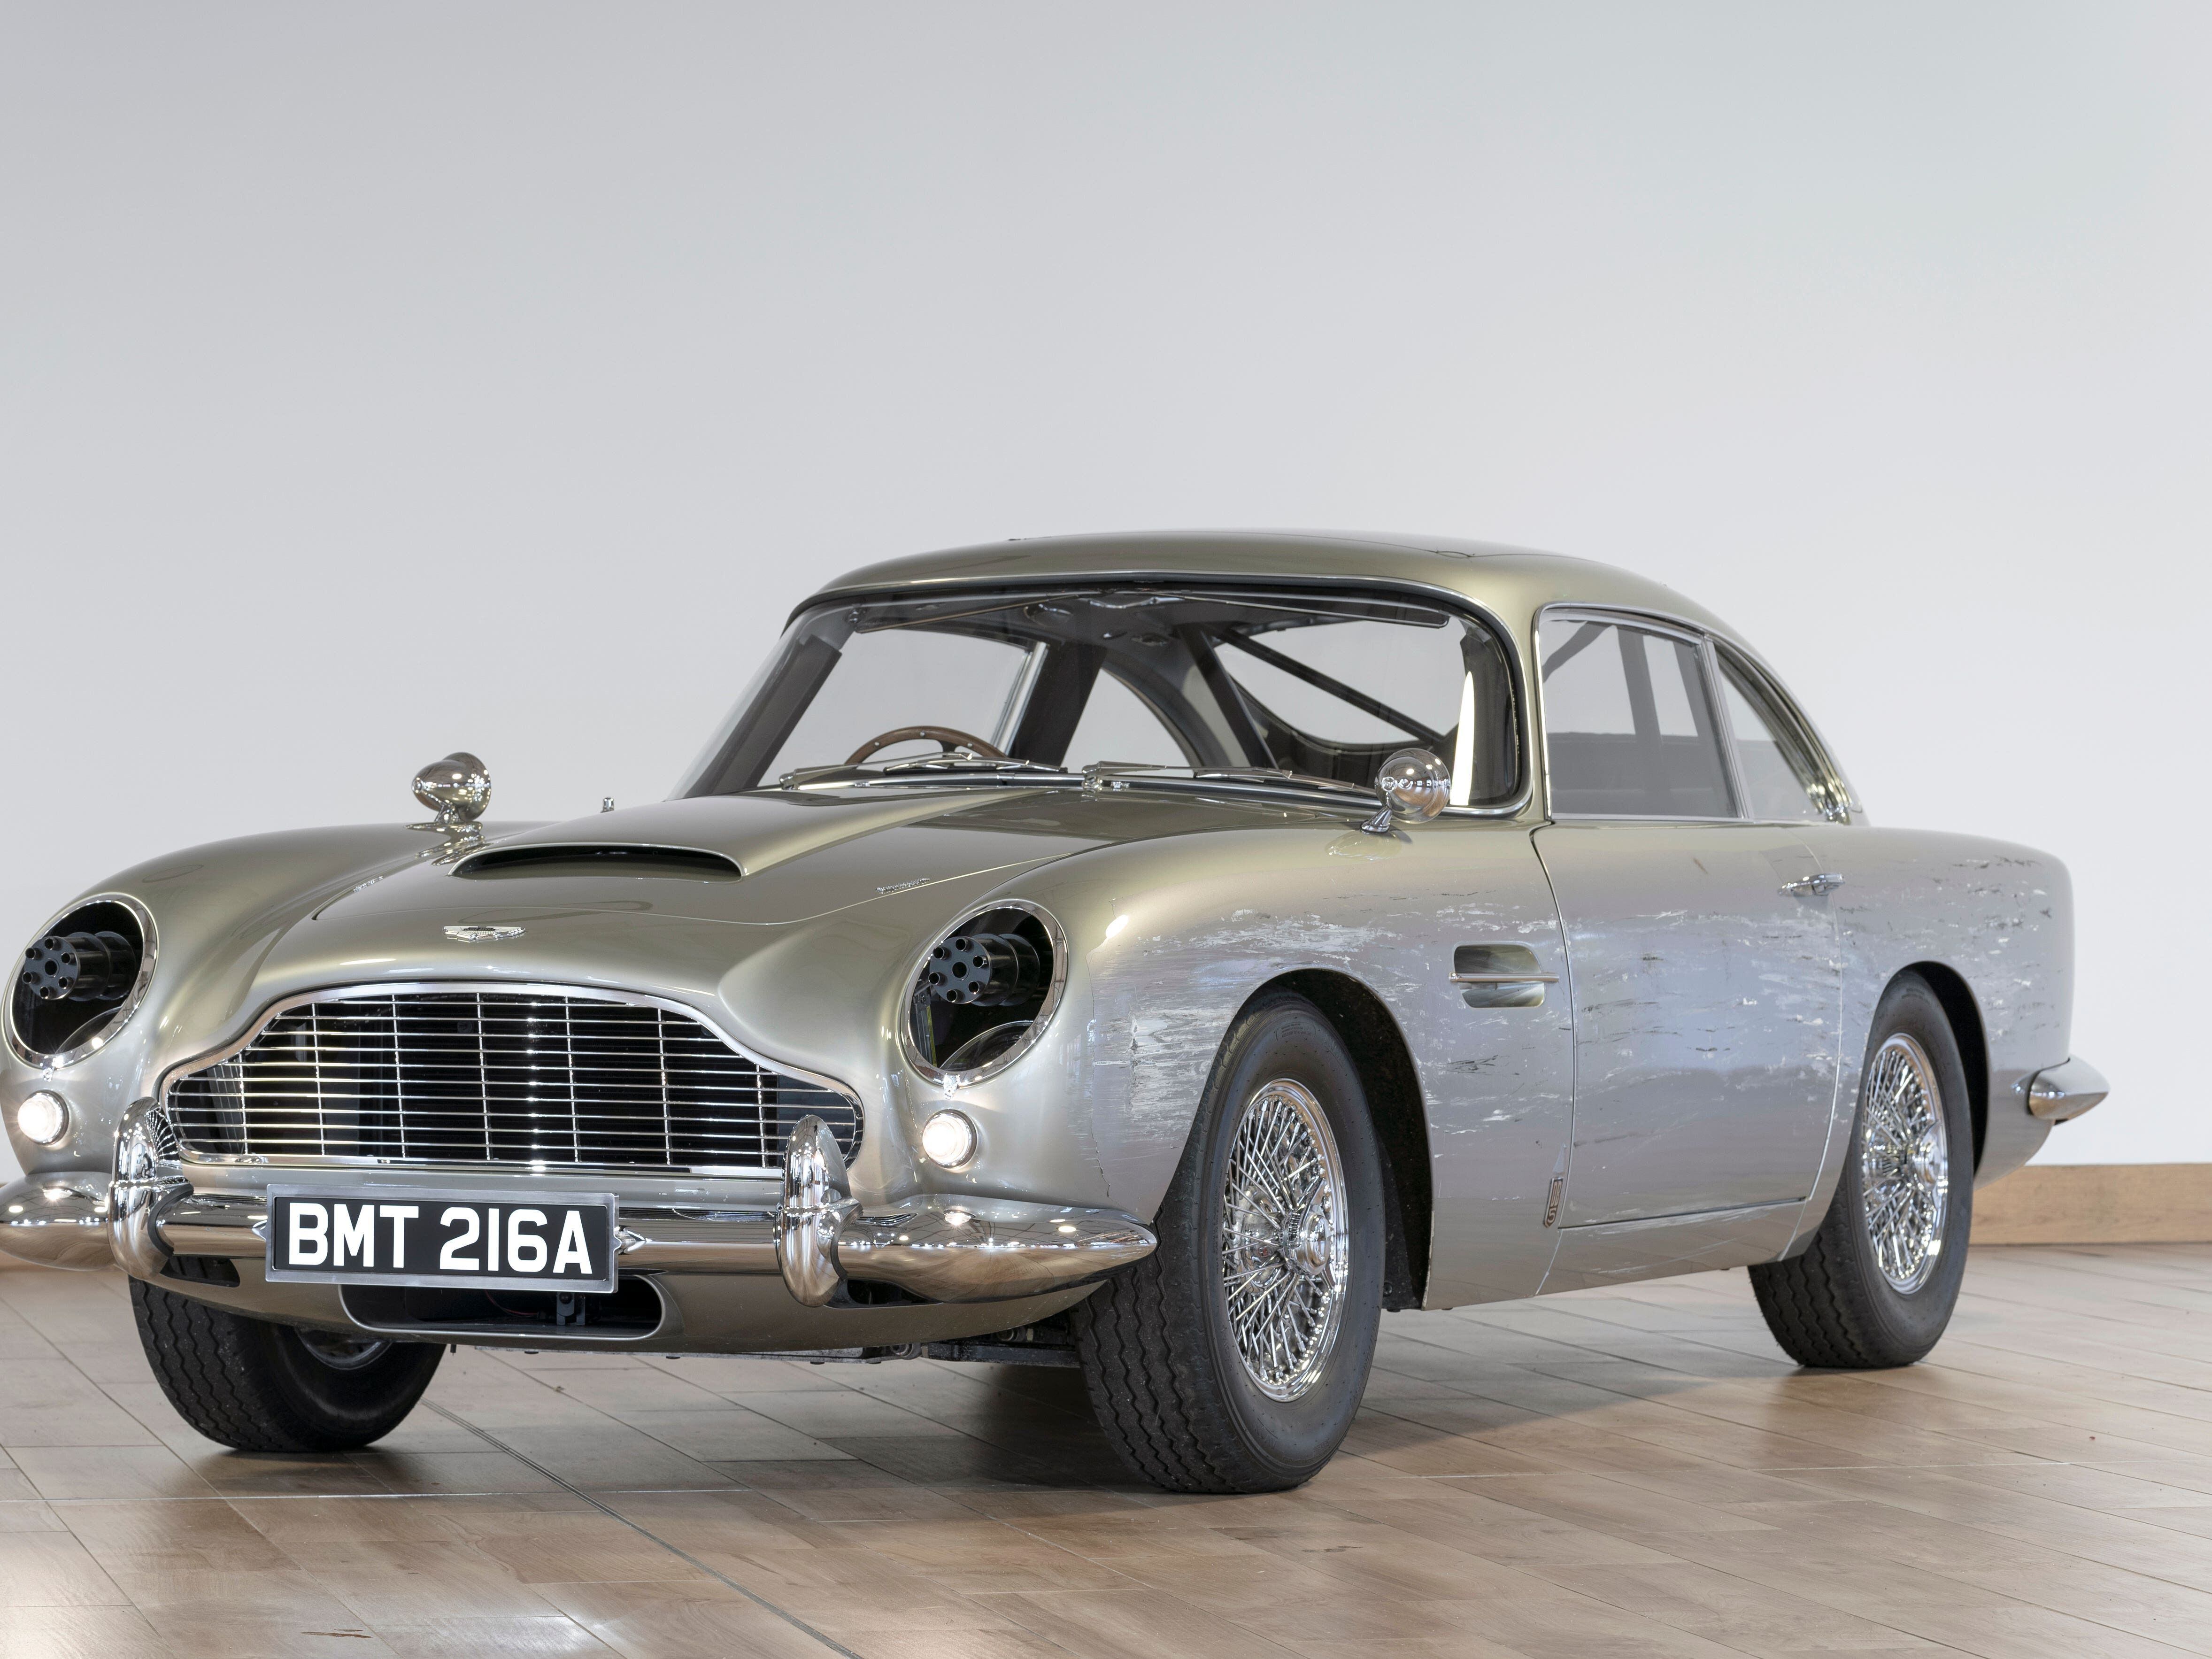 James Bond Aston Martin DB5 stunt car makes £2.9 million at charity auction